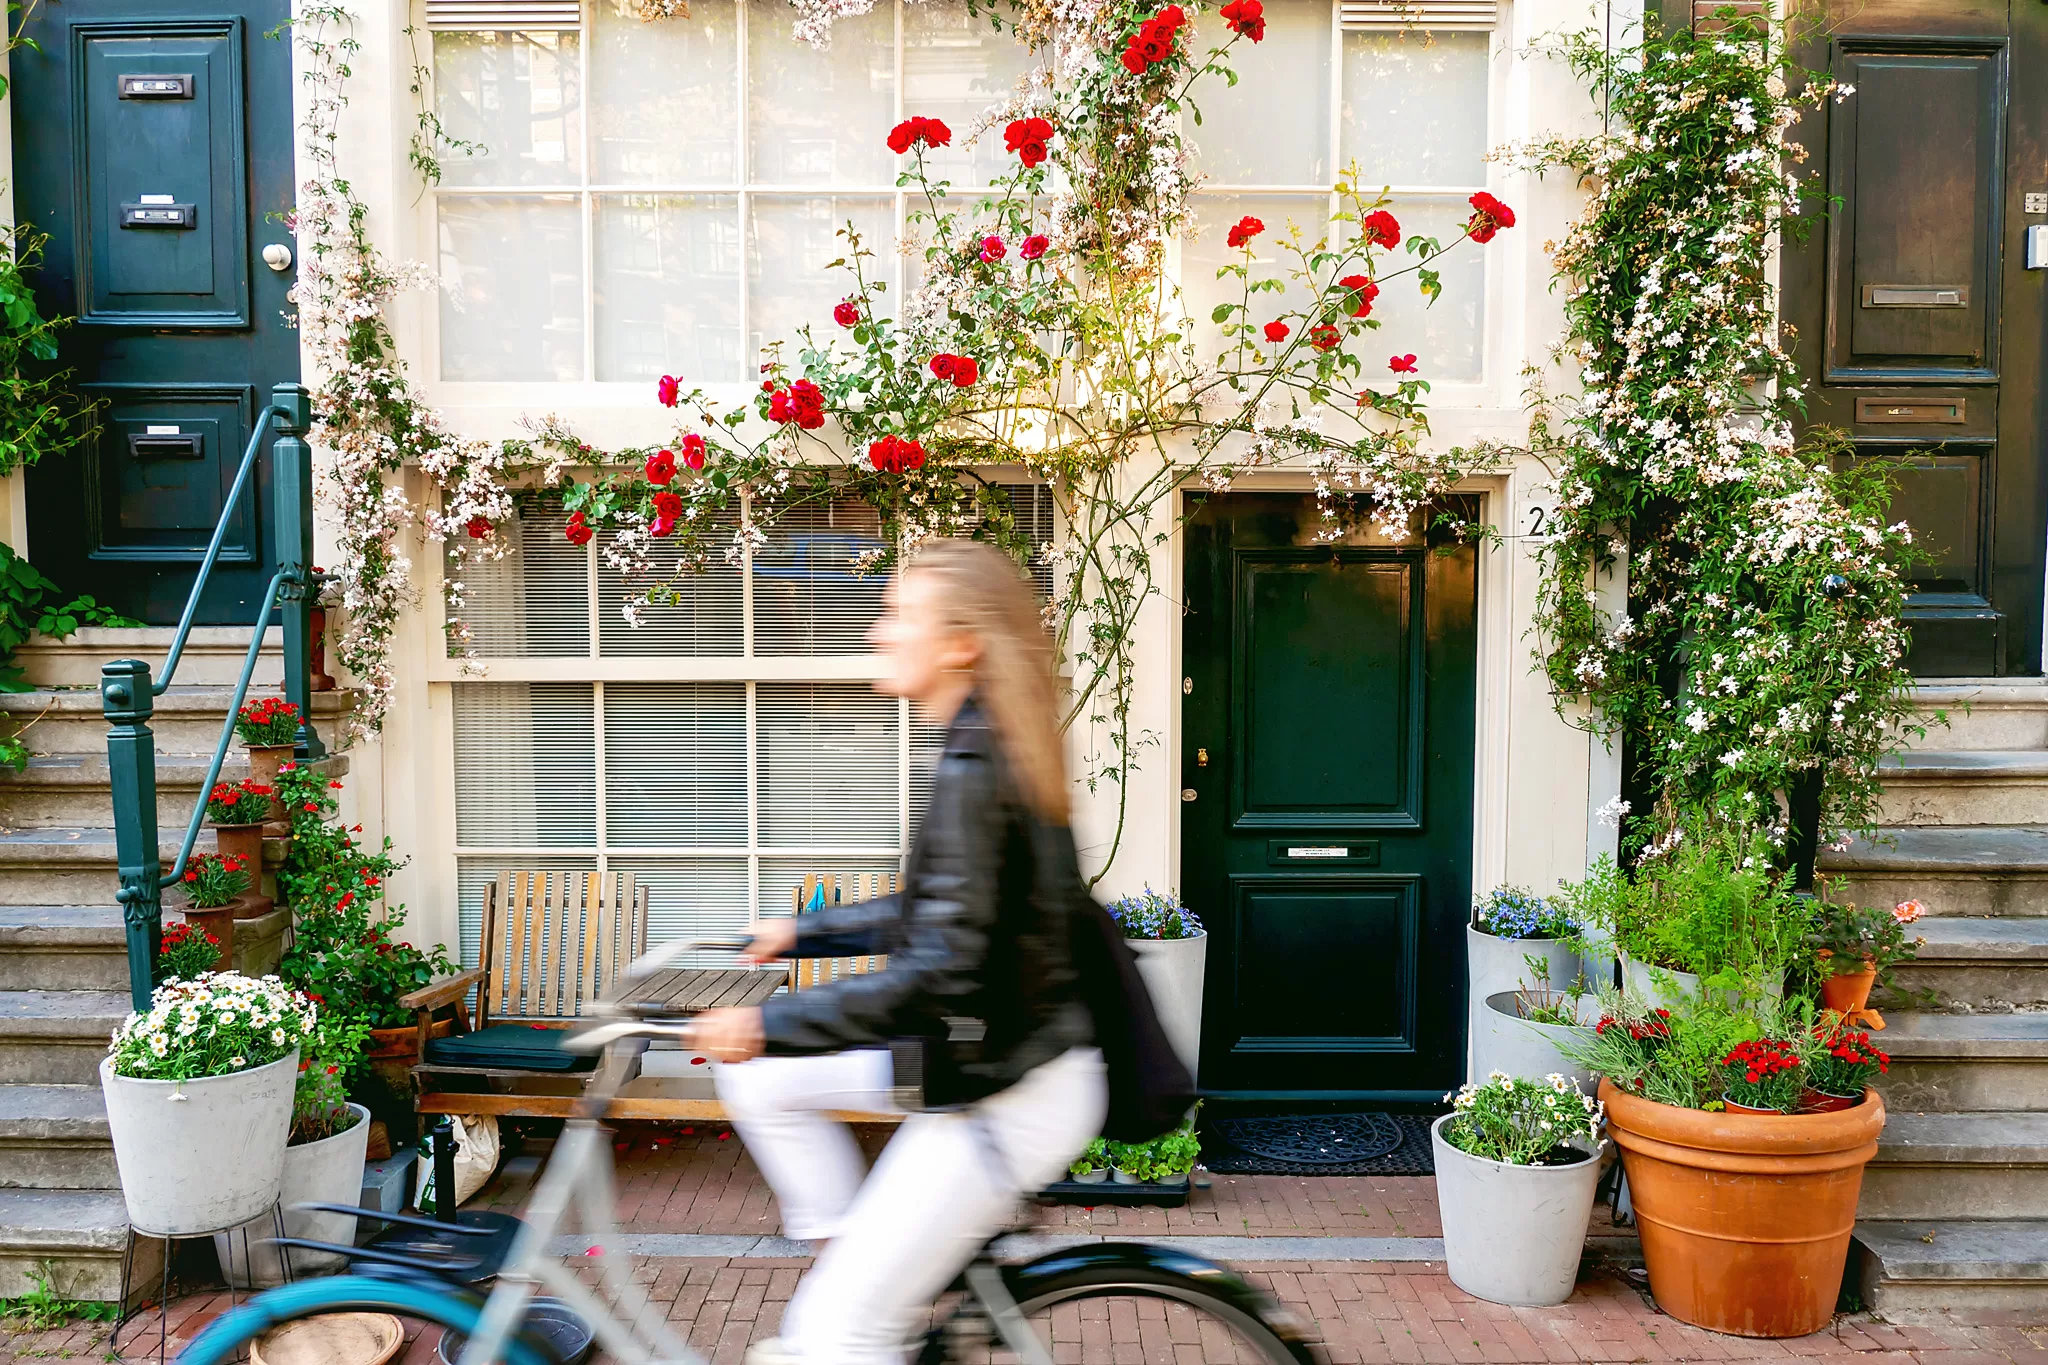 Girl Riding a Bike in Amsterdam